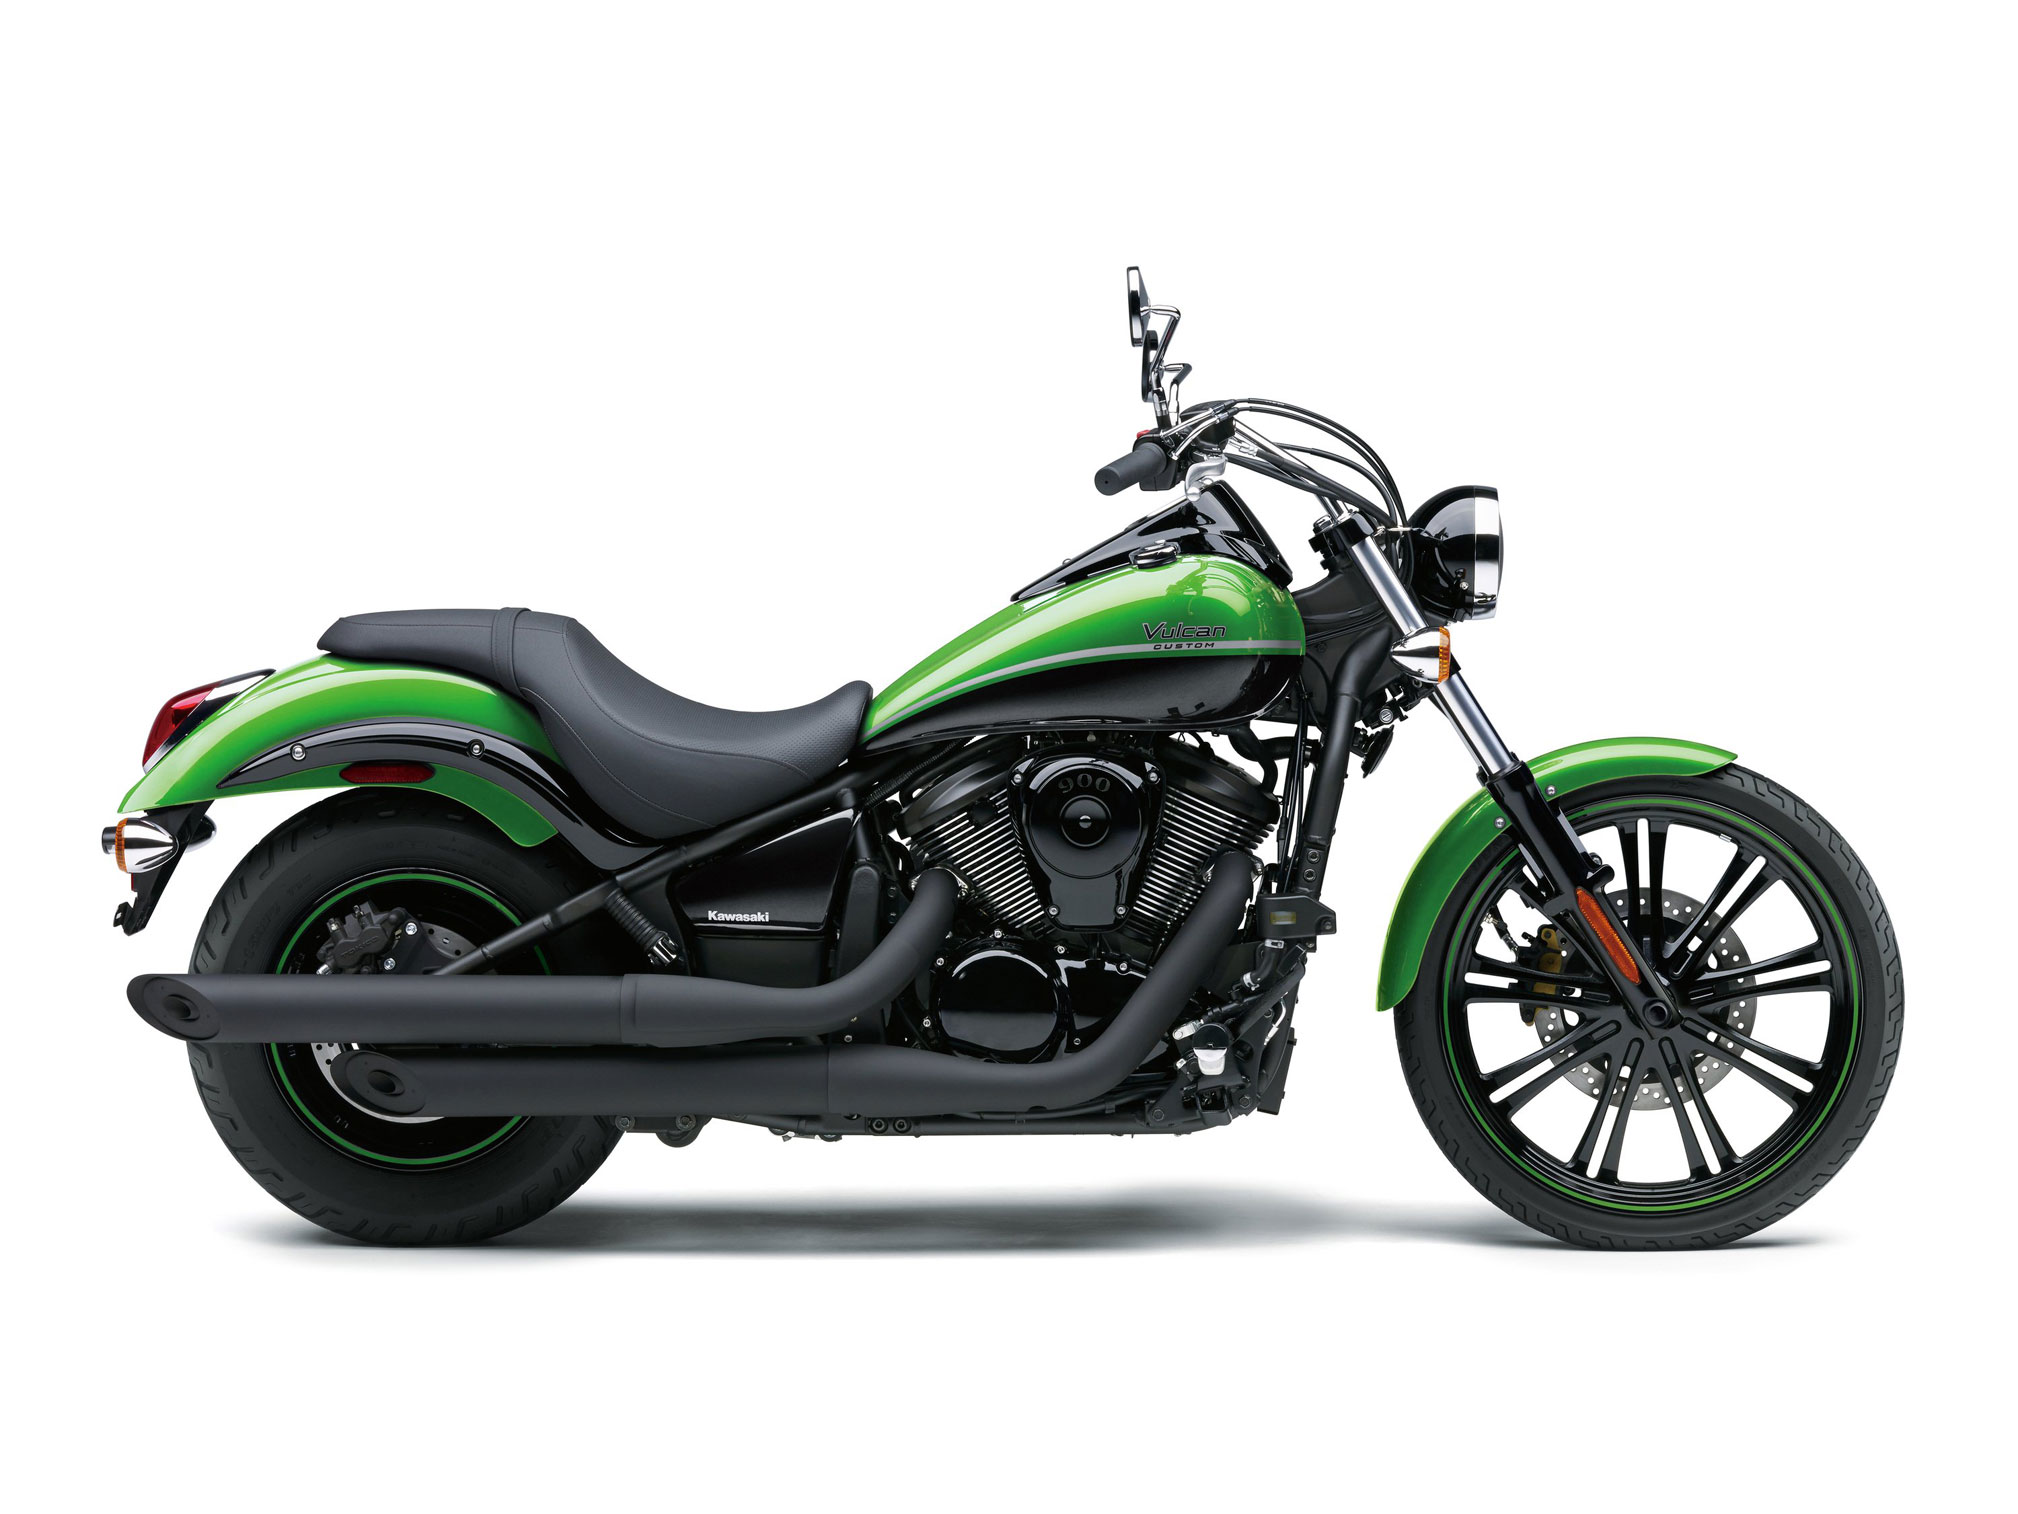 2018 Kawasaki 900 Custom Review • Total Motorcycle